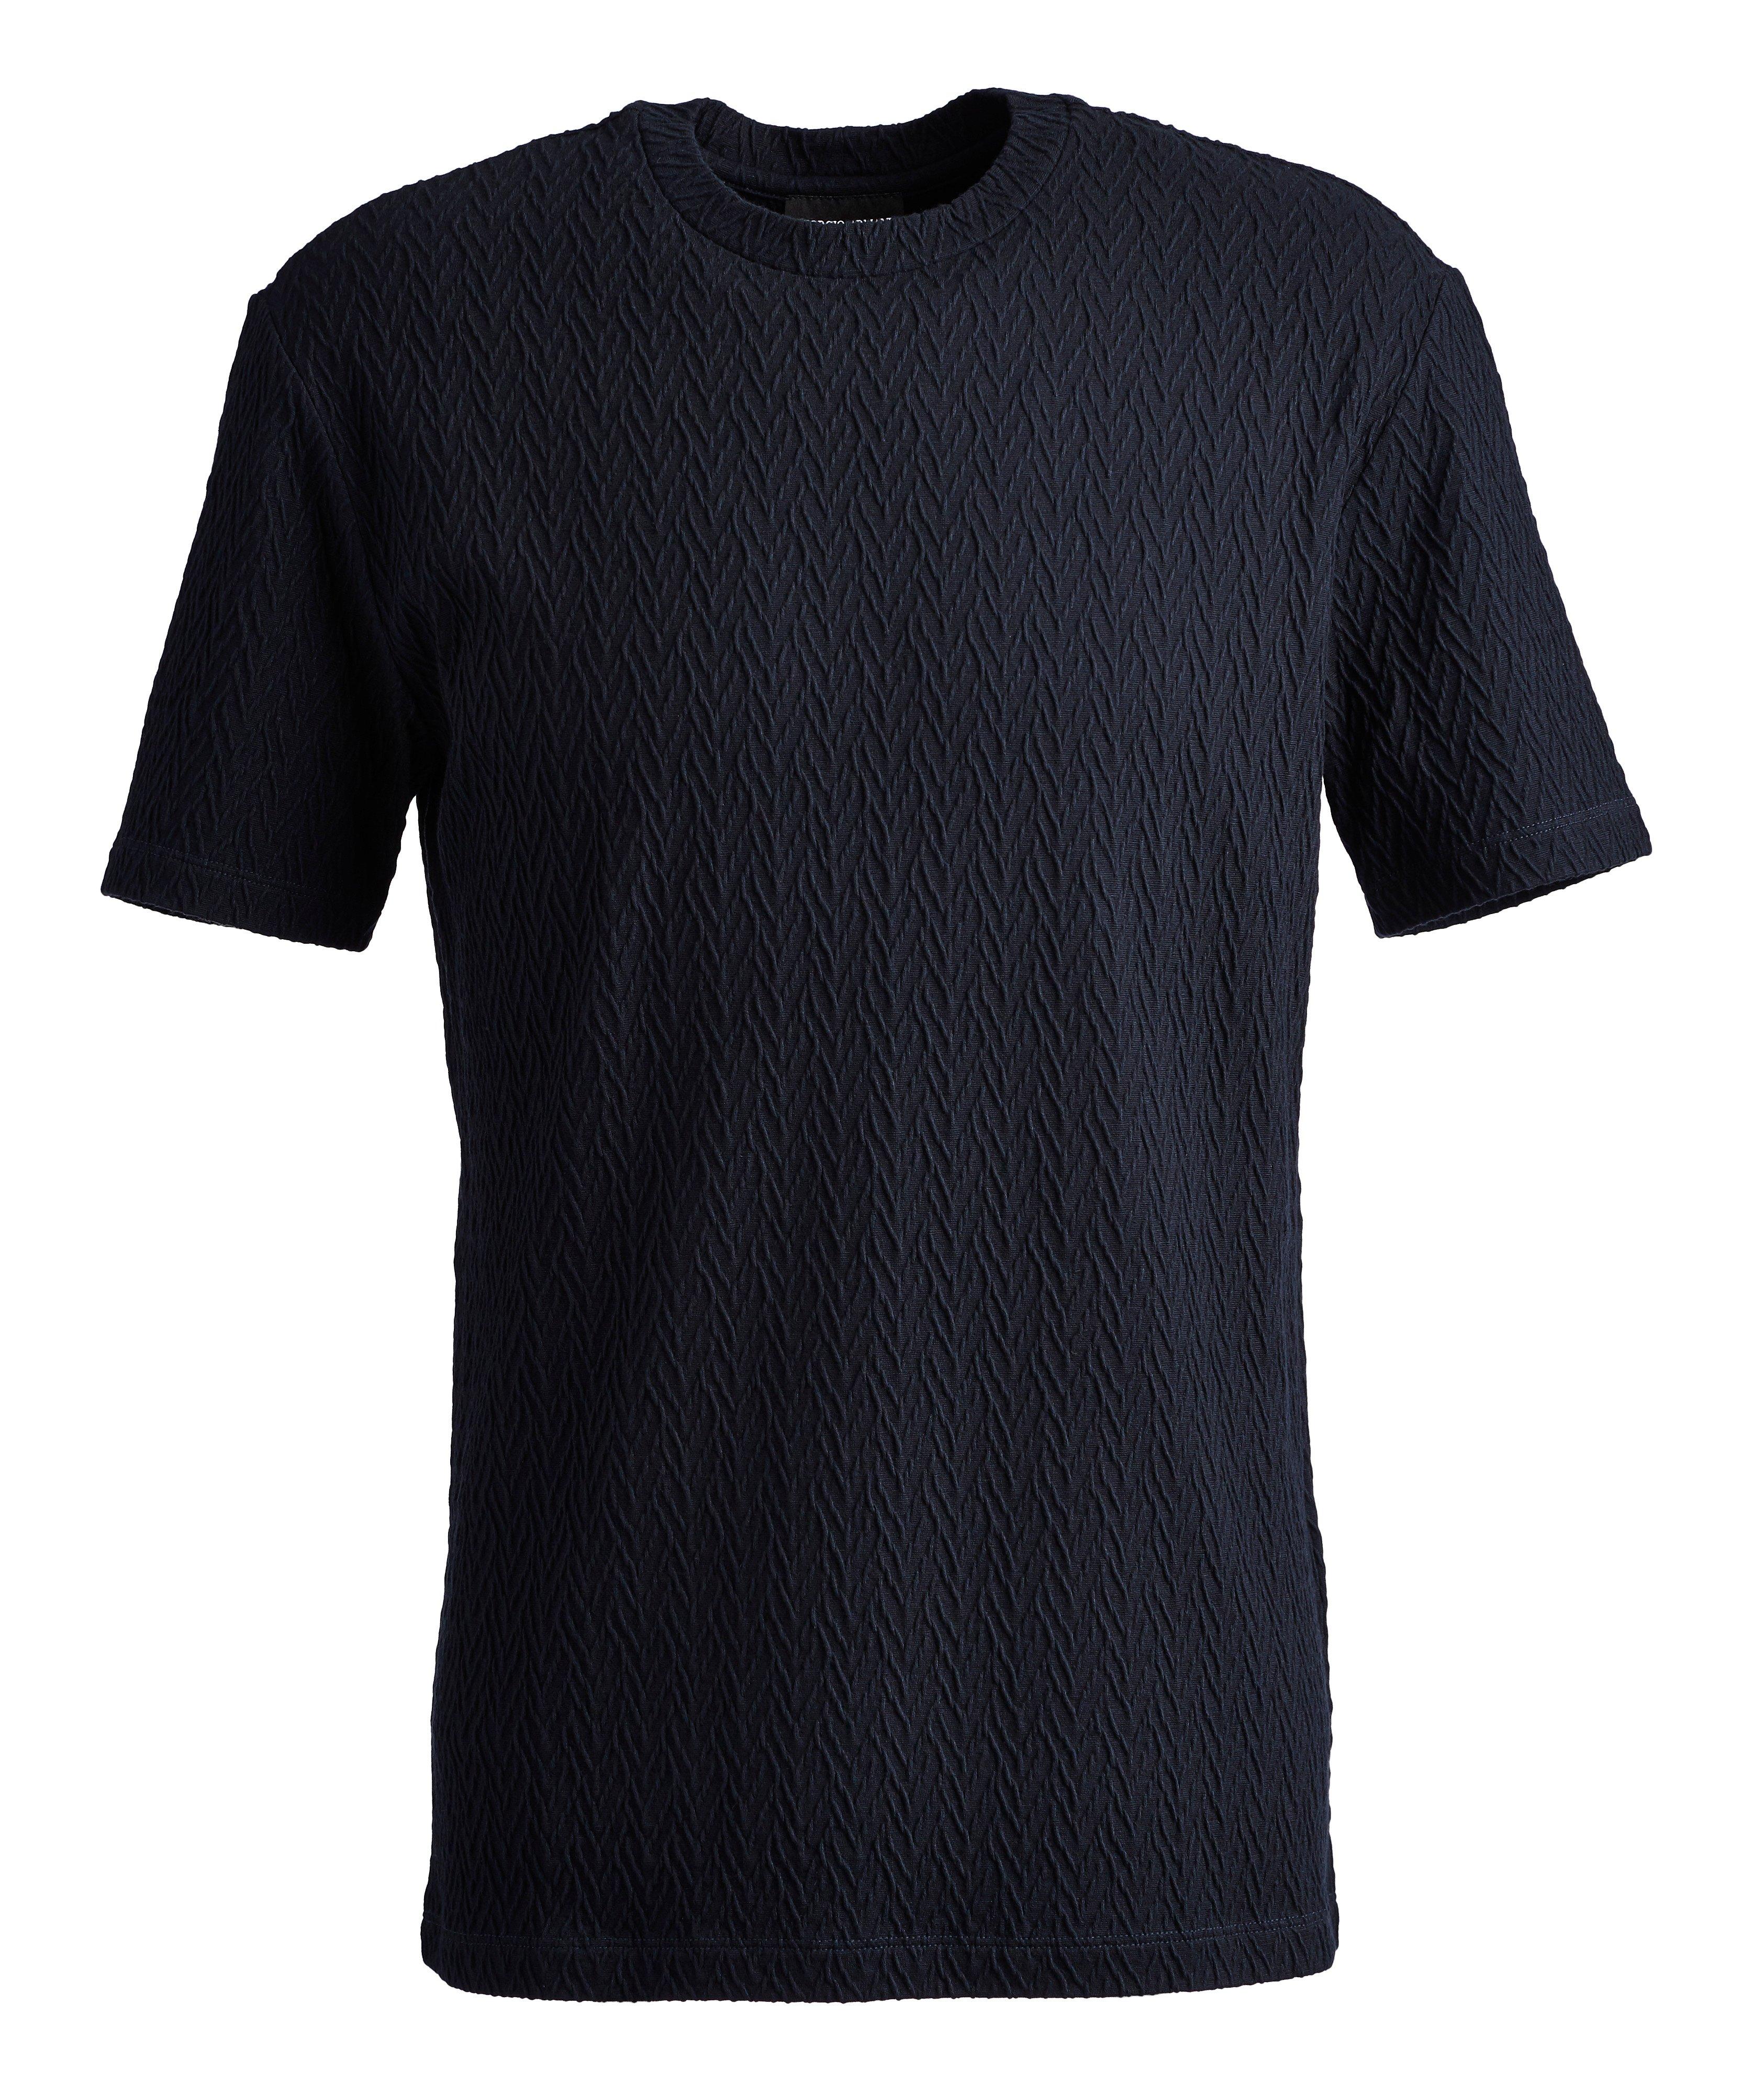 Slim-Fit Stretch-Blend T-Shirt image 0